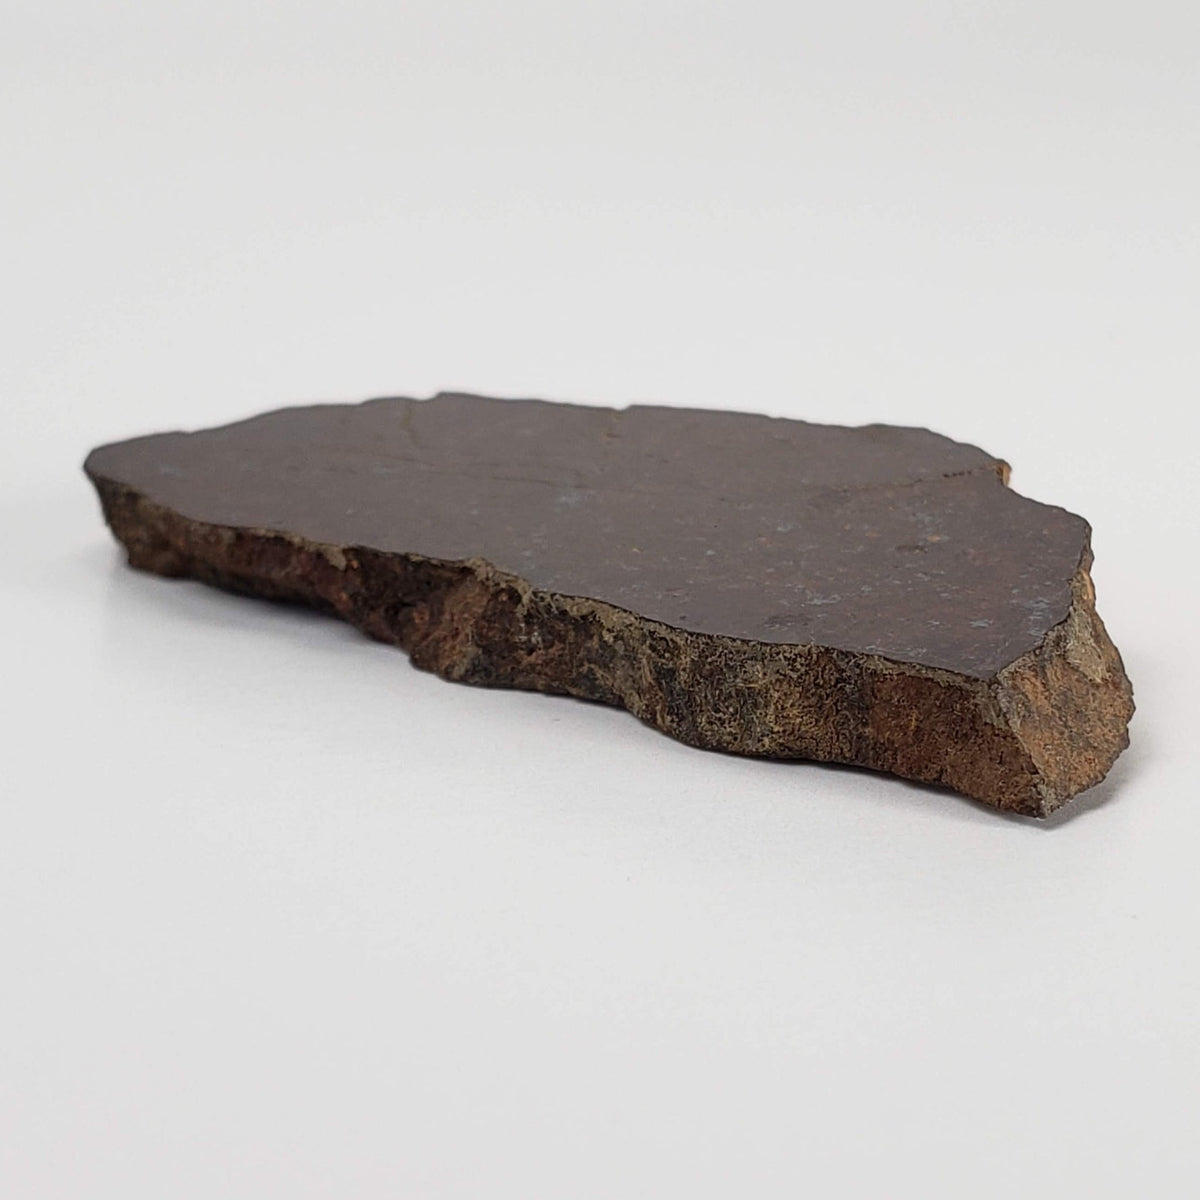 Shisr Shi 010 Meteorite | 11.3 Grams | Slice | L5 Chondrite | Rare | Shisr Desert, Oman